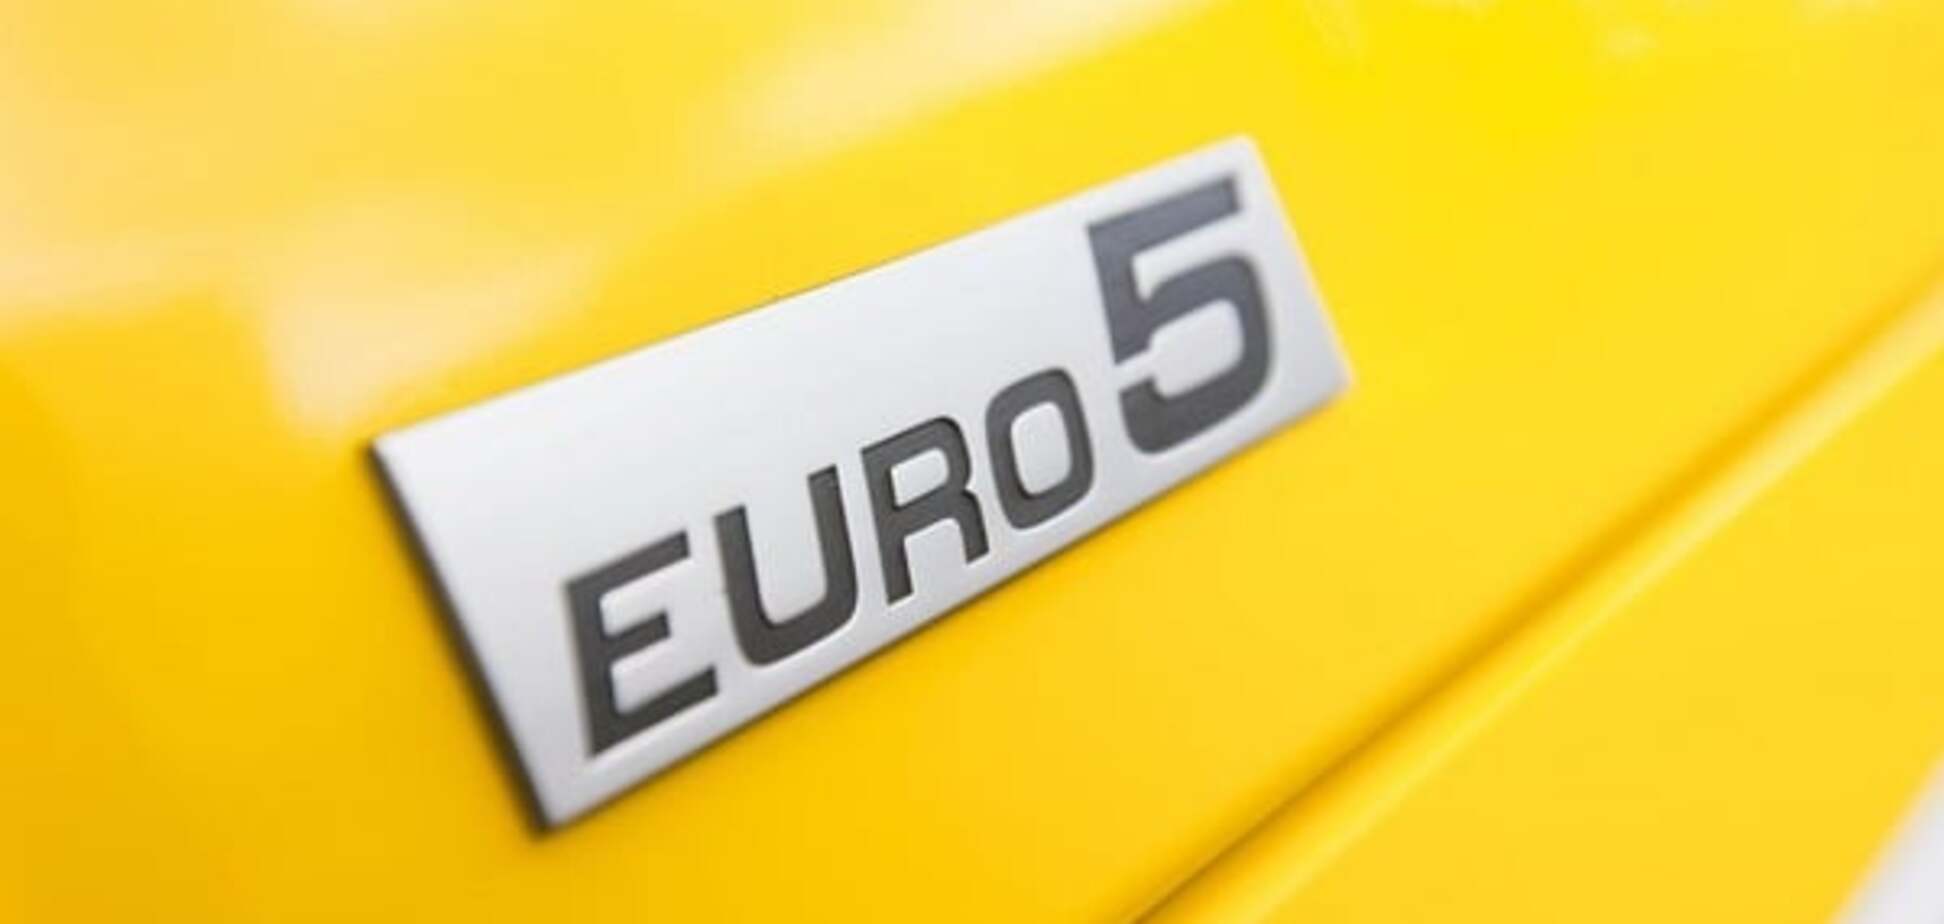 Евро 5